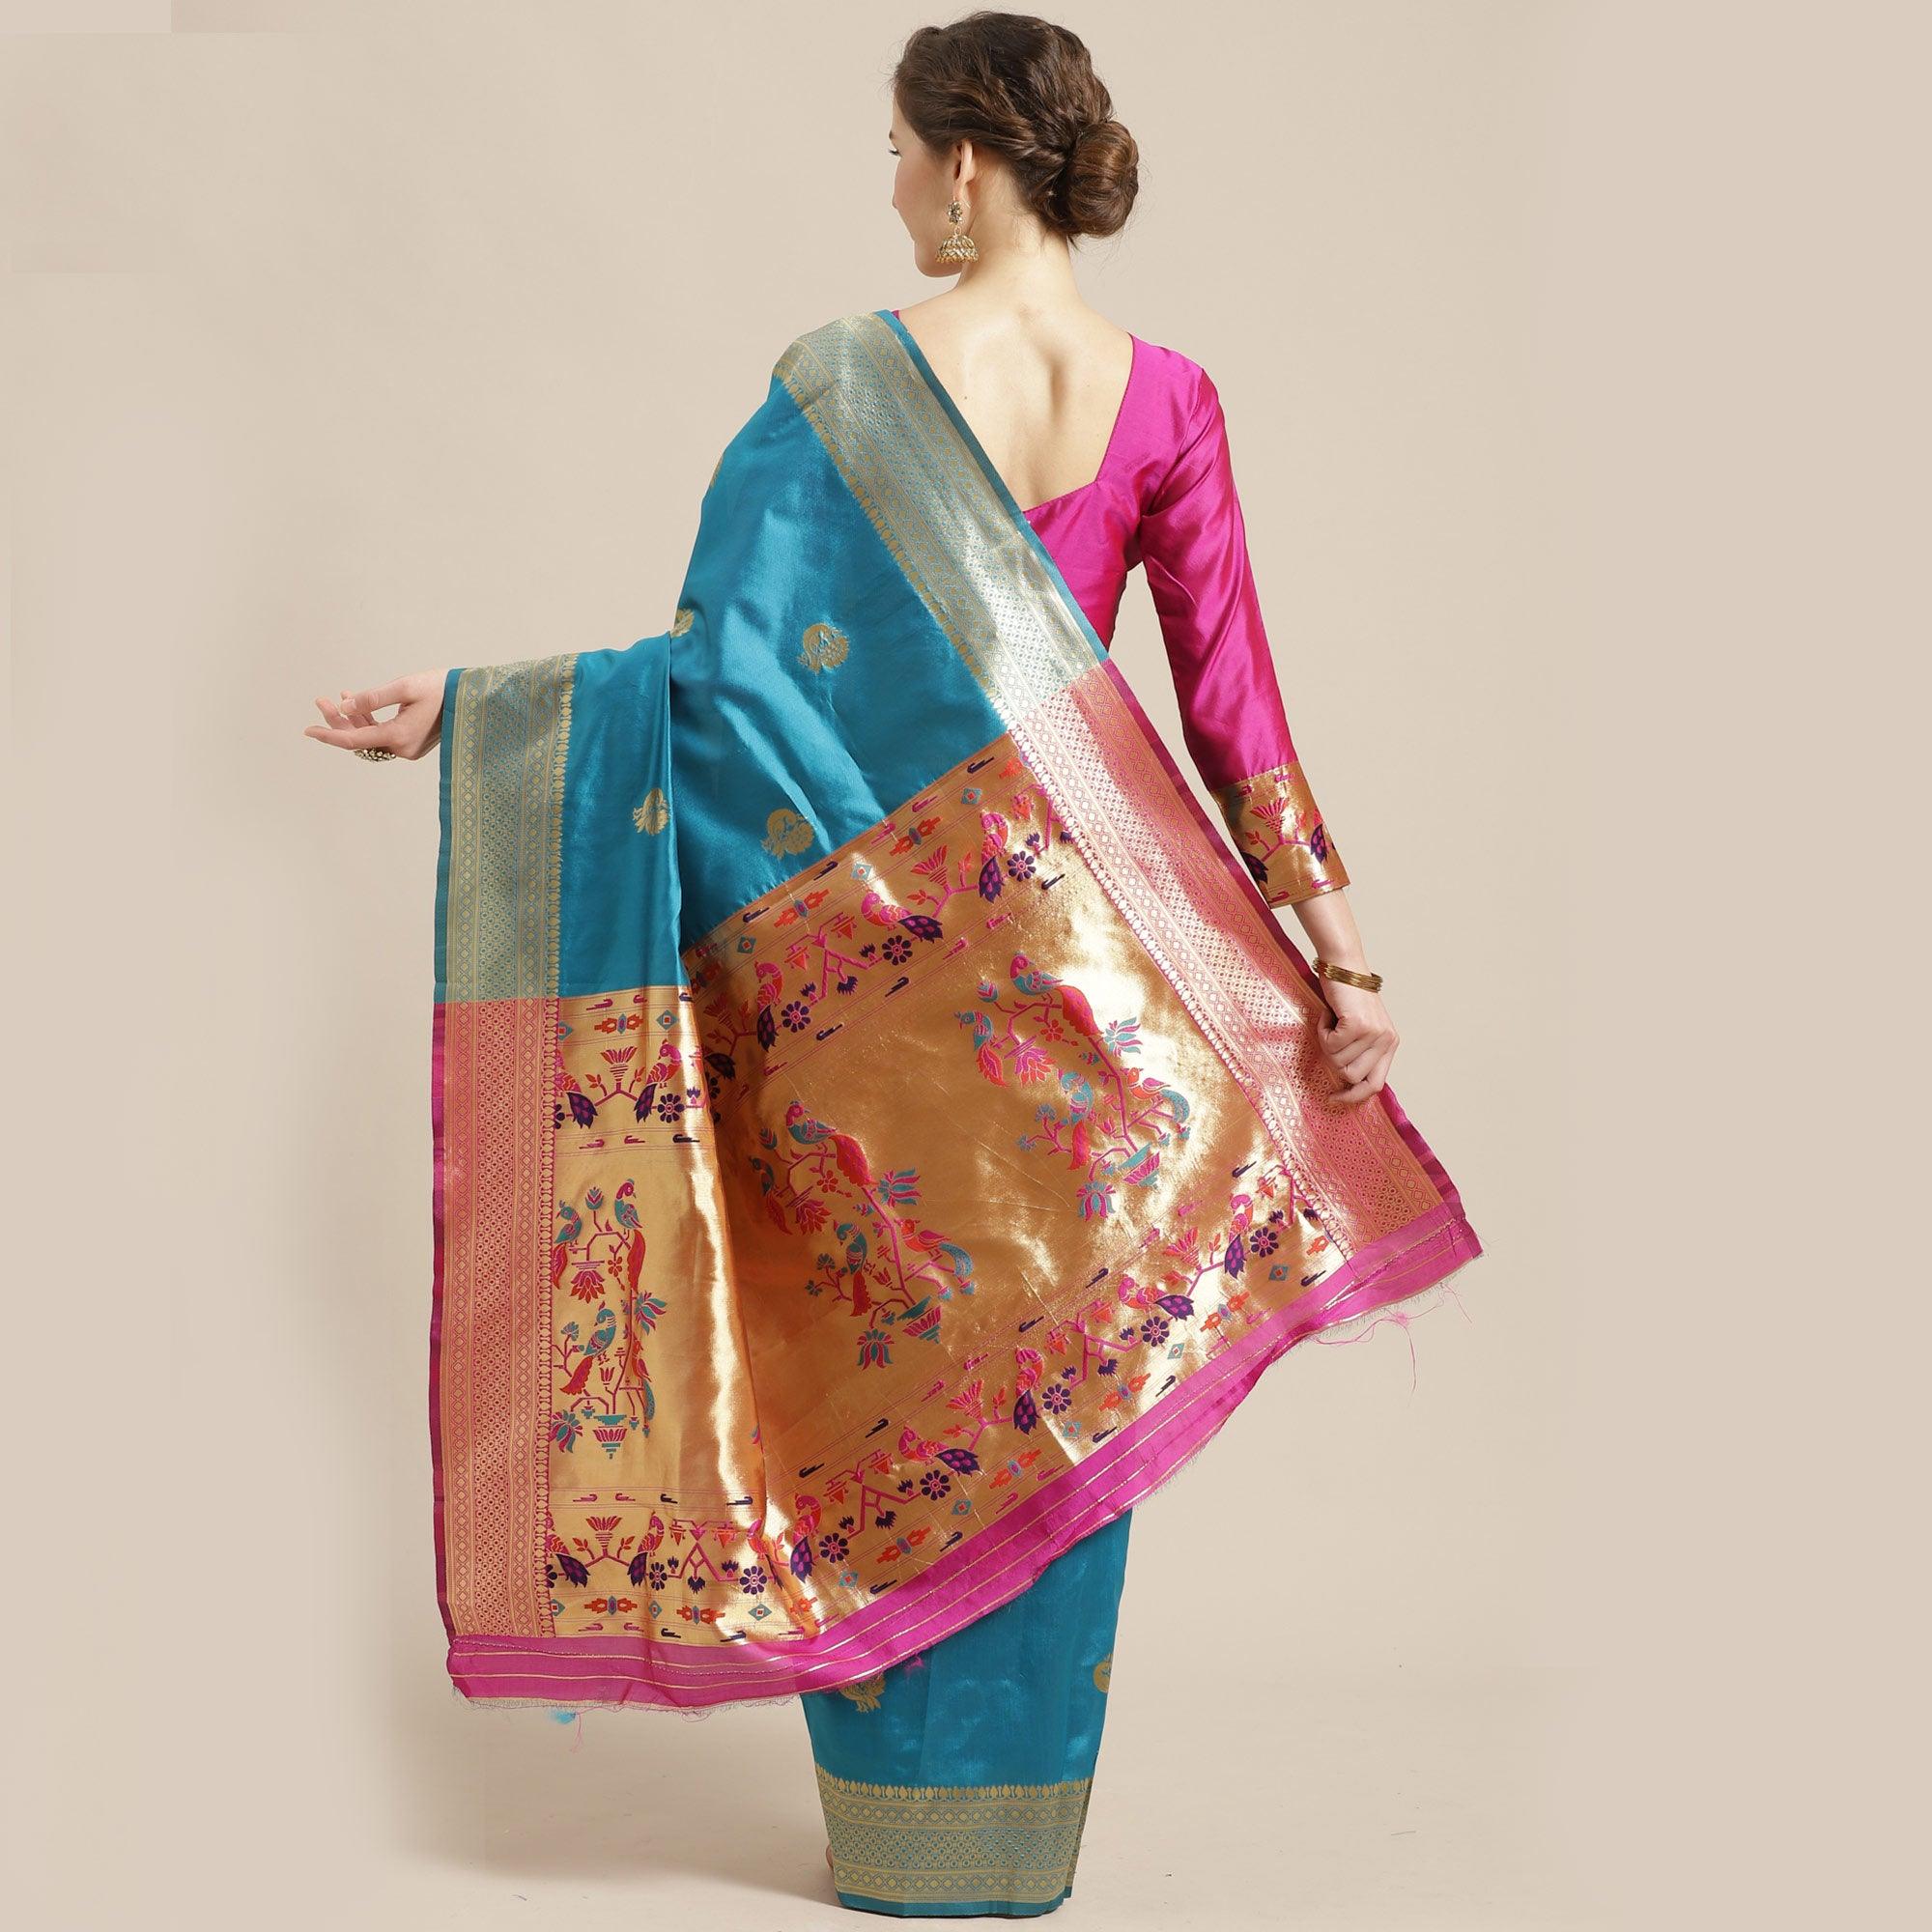 Lovely Sky Blue Colored Festive Wear Woven Silk Blend Saree - Peachmode